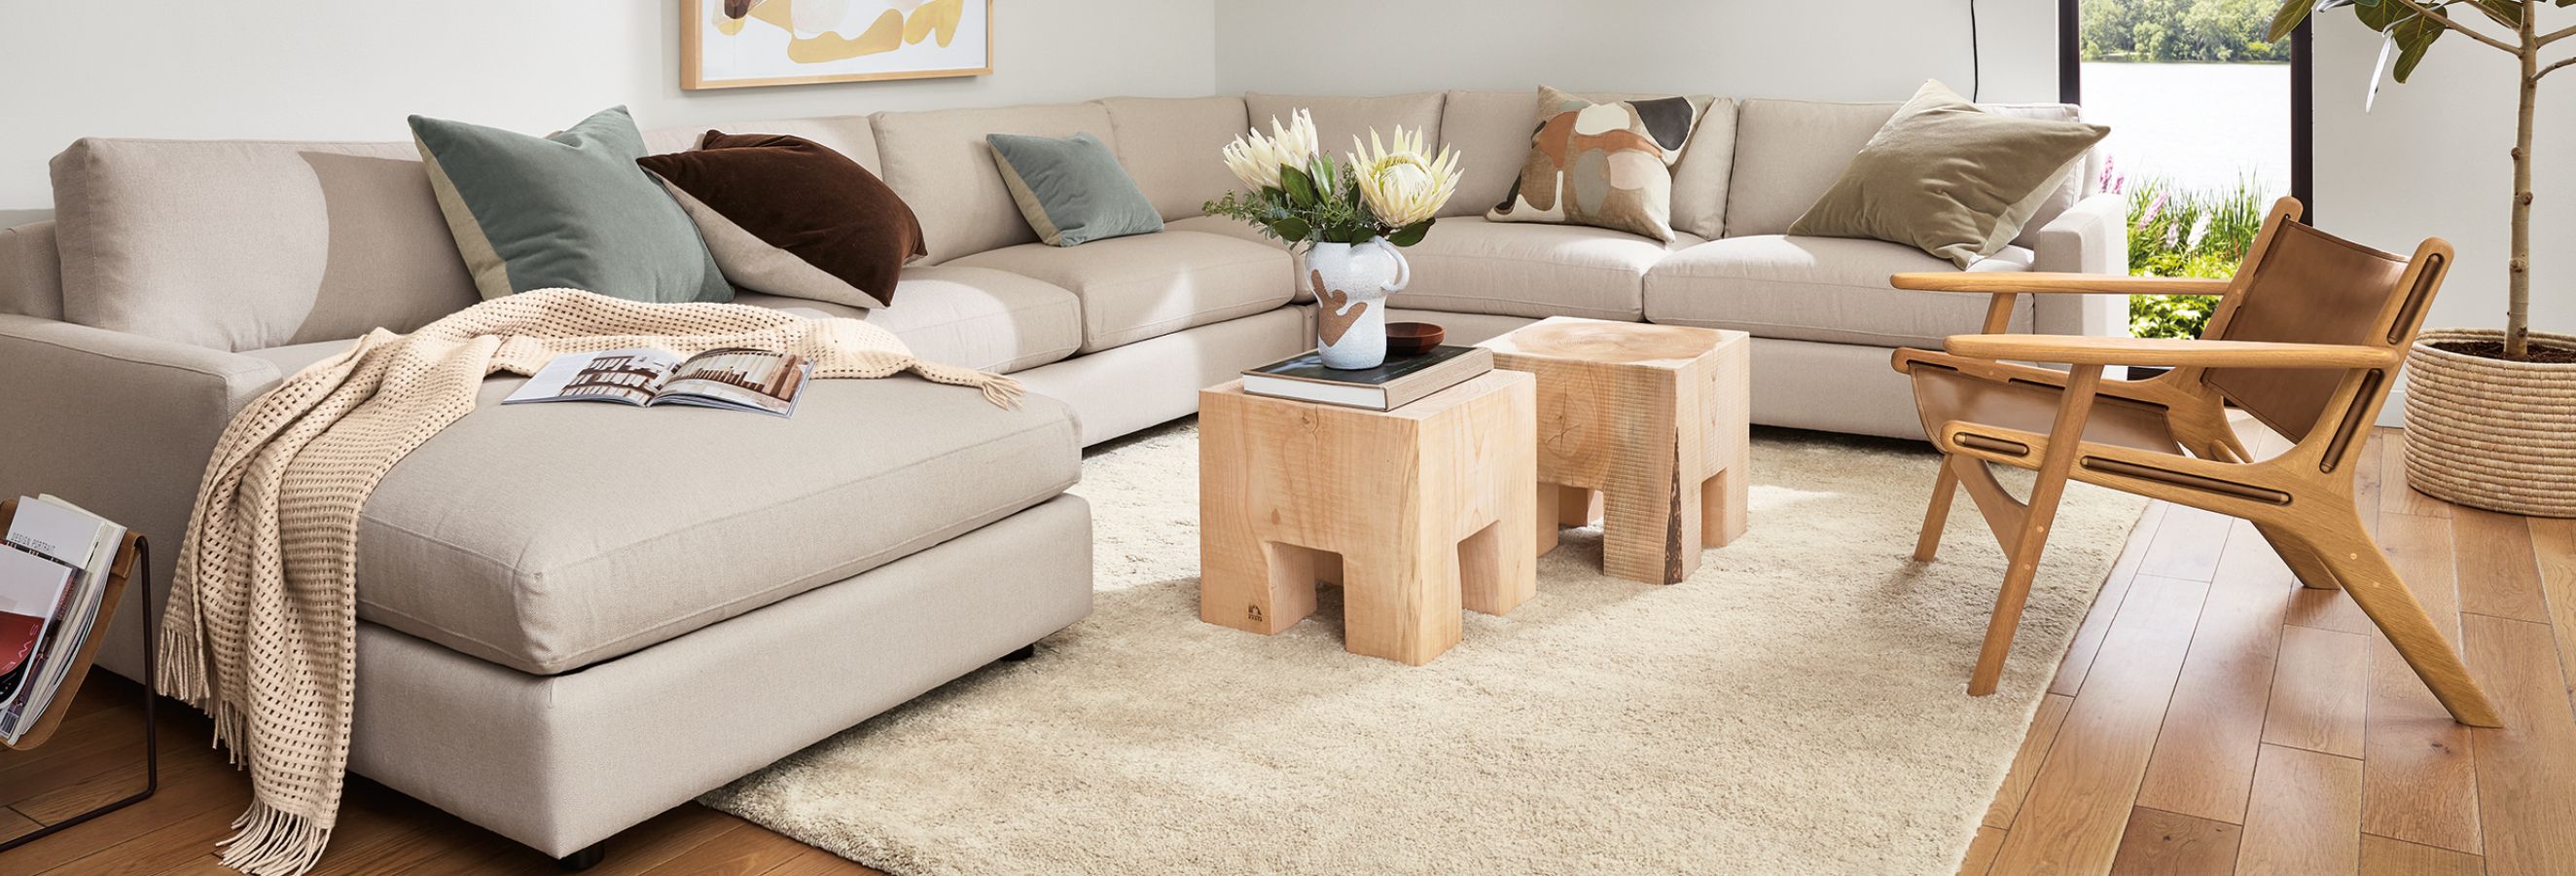 Modern Living Room Furniture - Room & Board